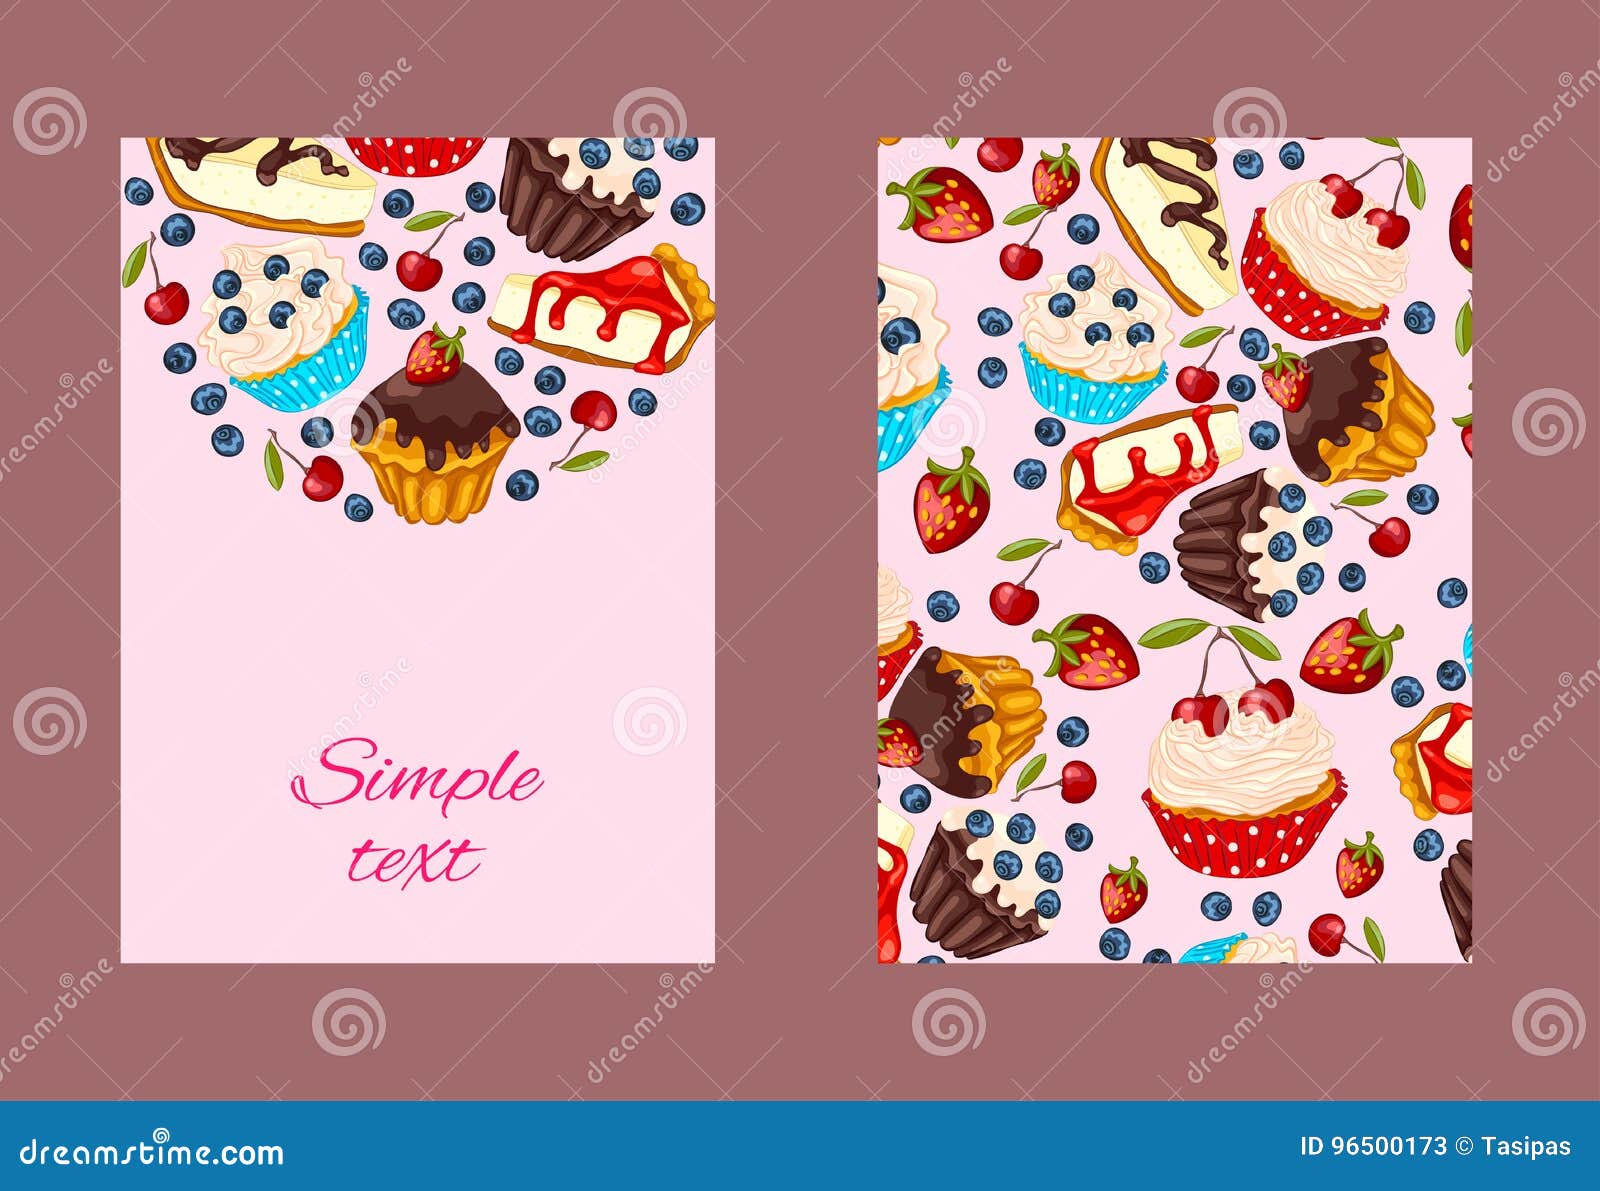 Cartoon Style Restaurant or Cafe Menu Design. Stock Vector - Illustration  of background, design: 96500173